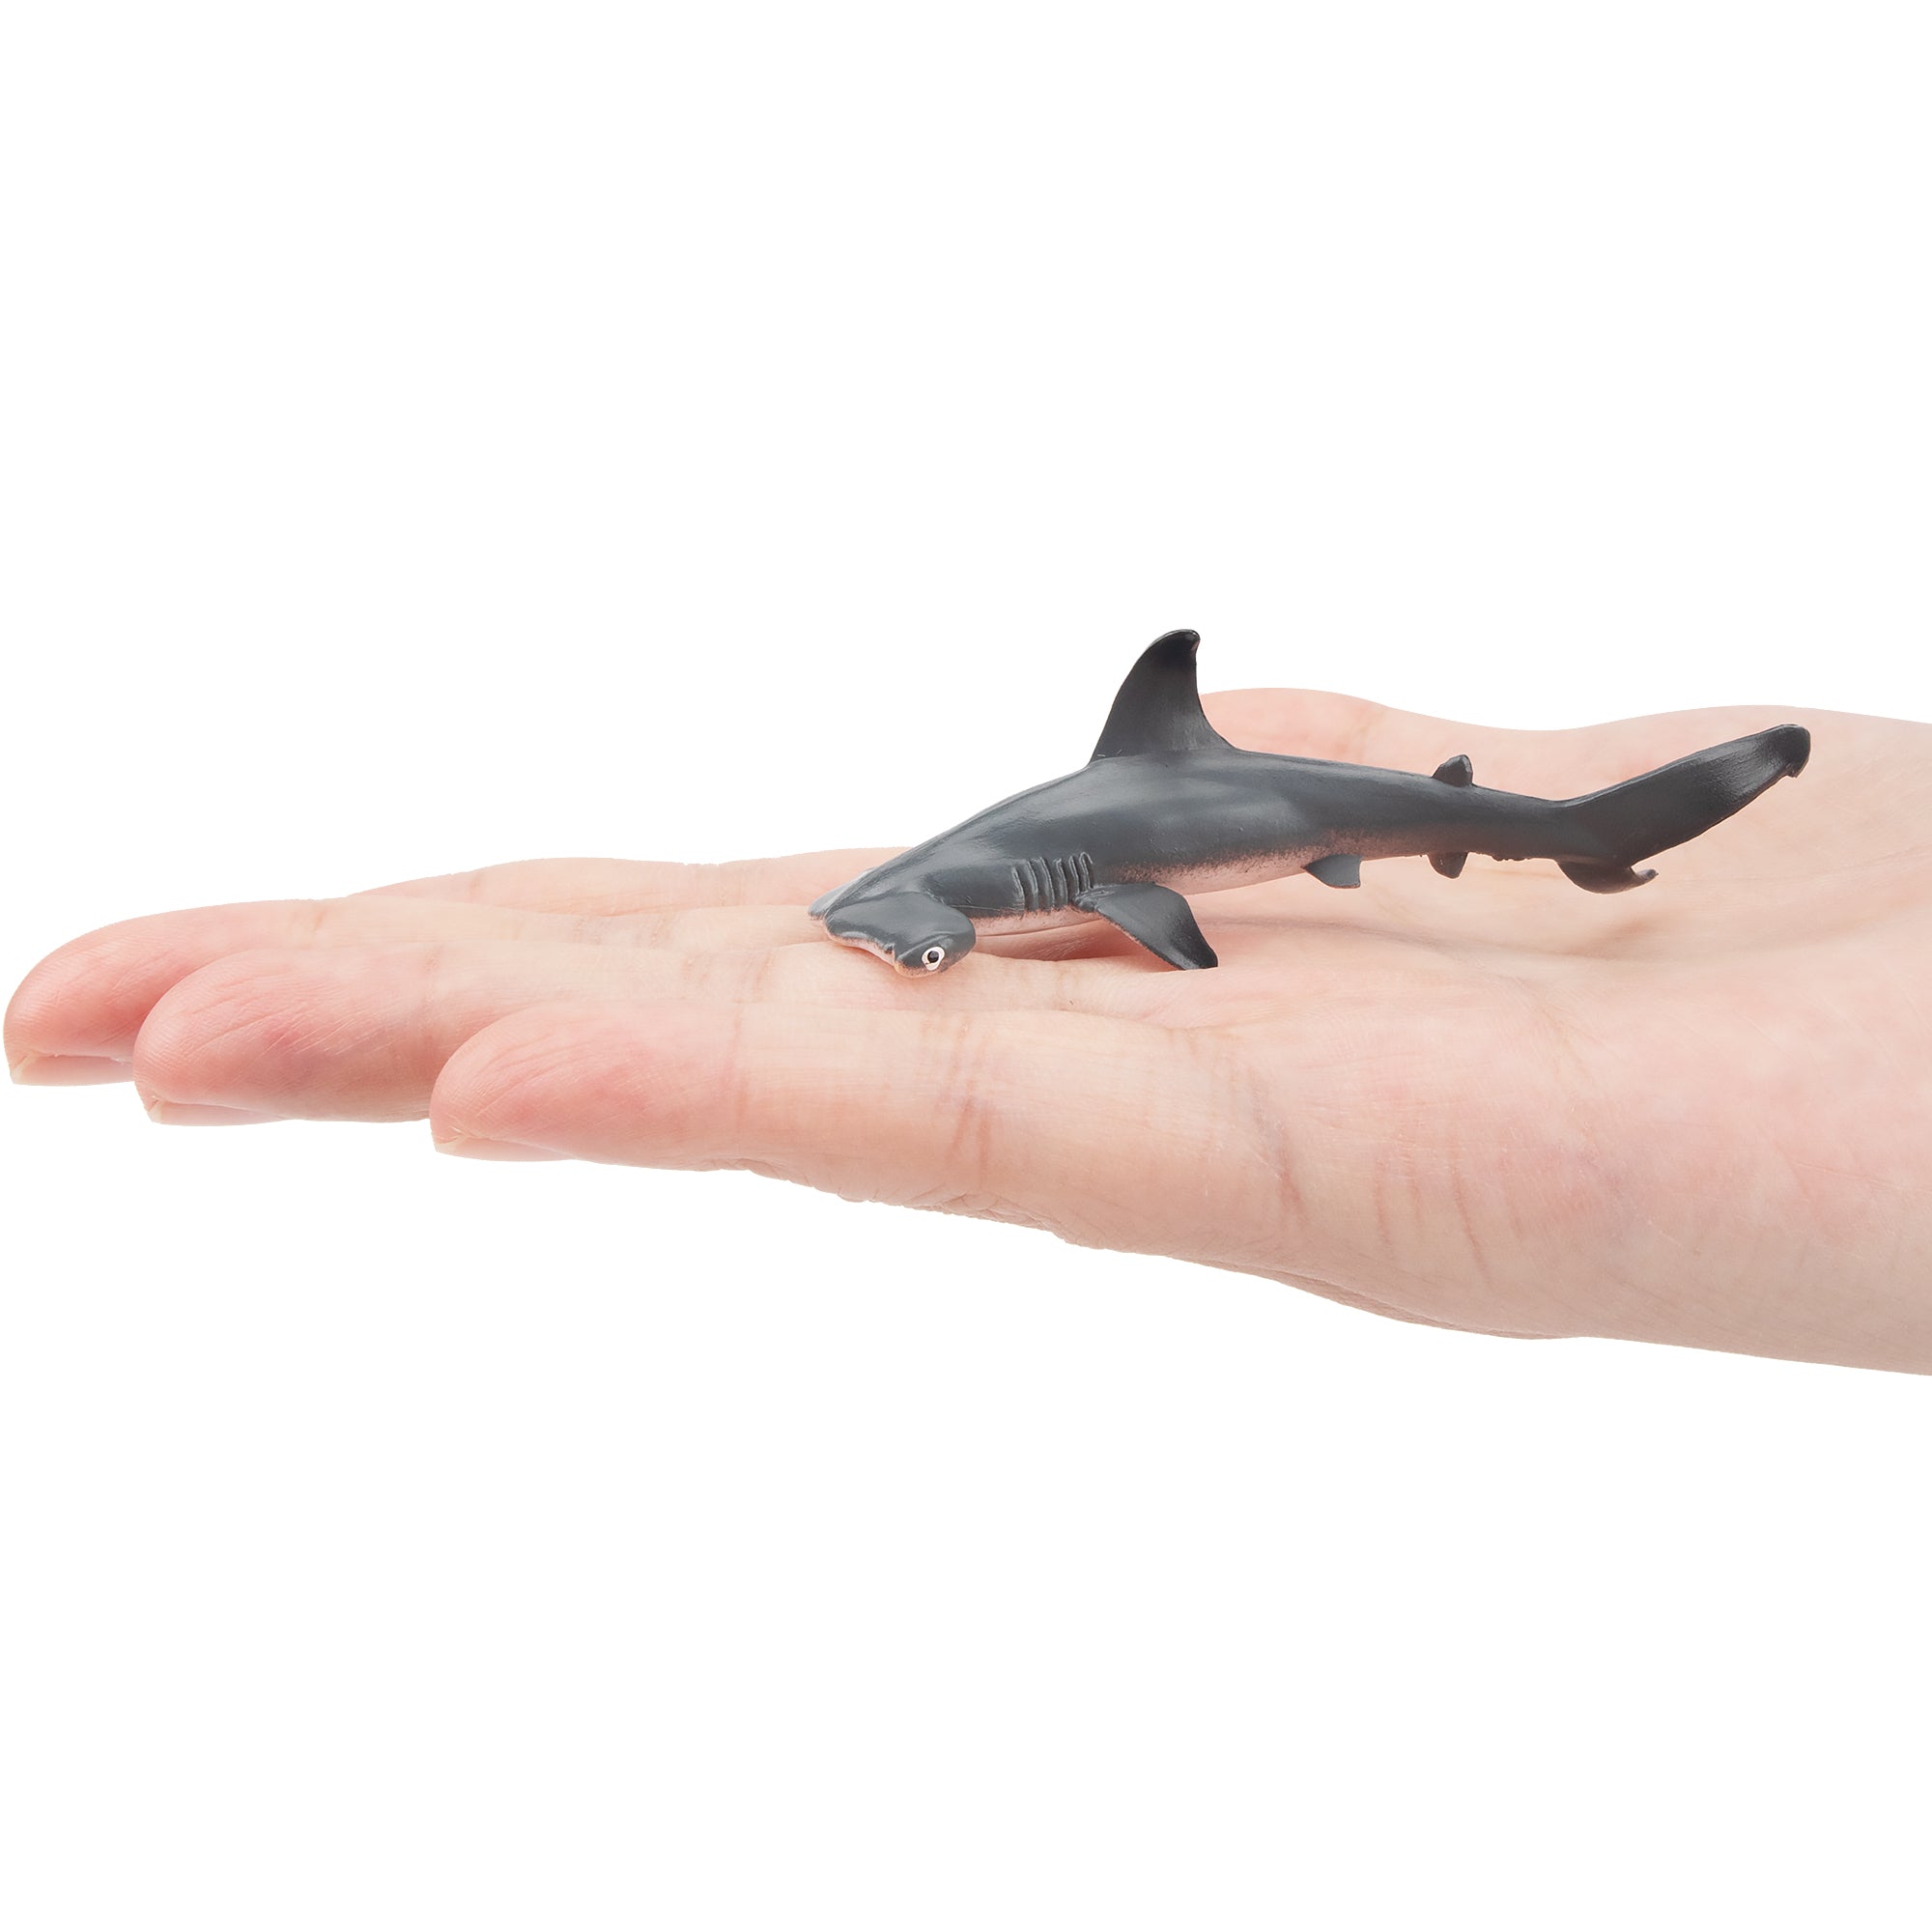 Toymany Small Size Scalloped Hammerhead Shark Figurine Toy-on hand